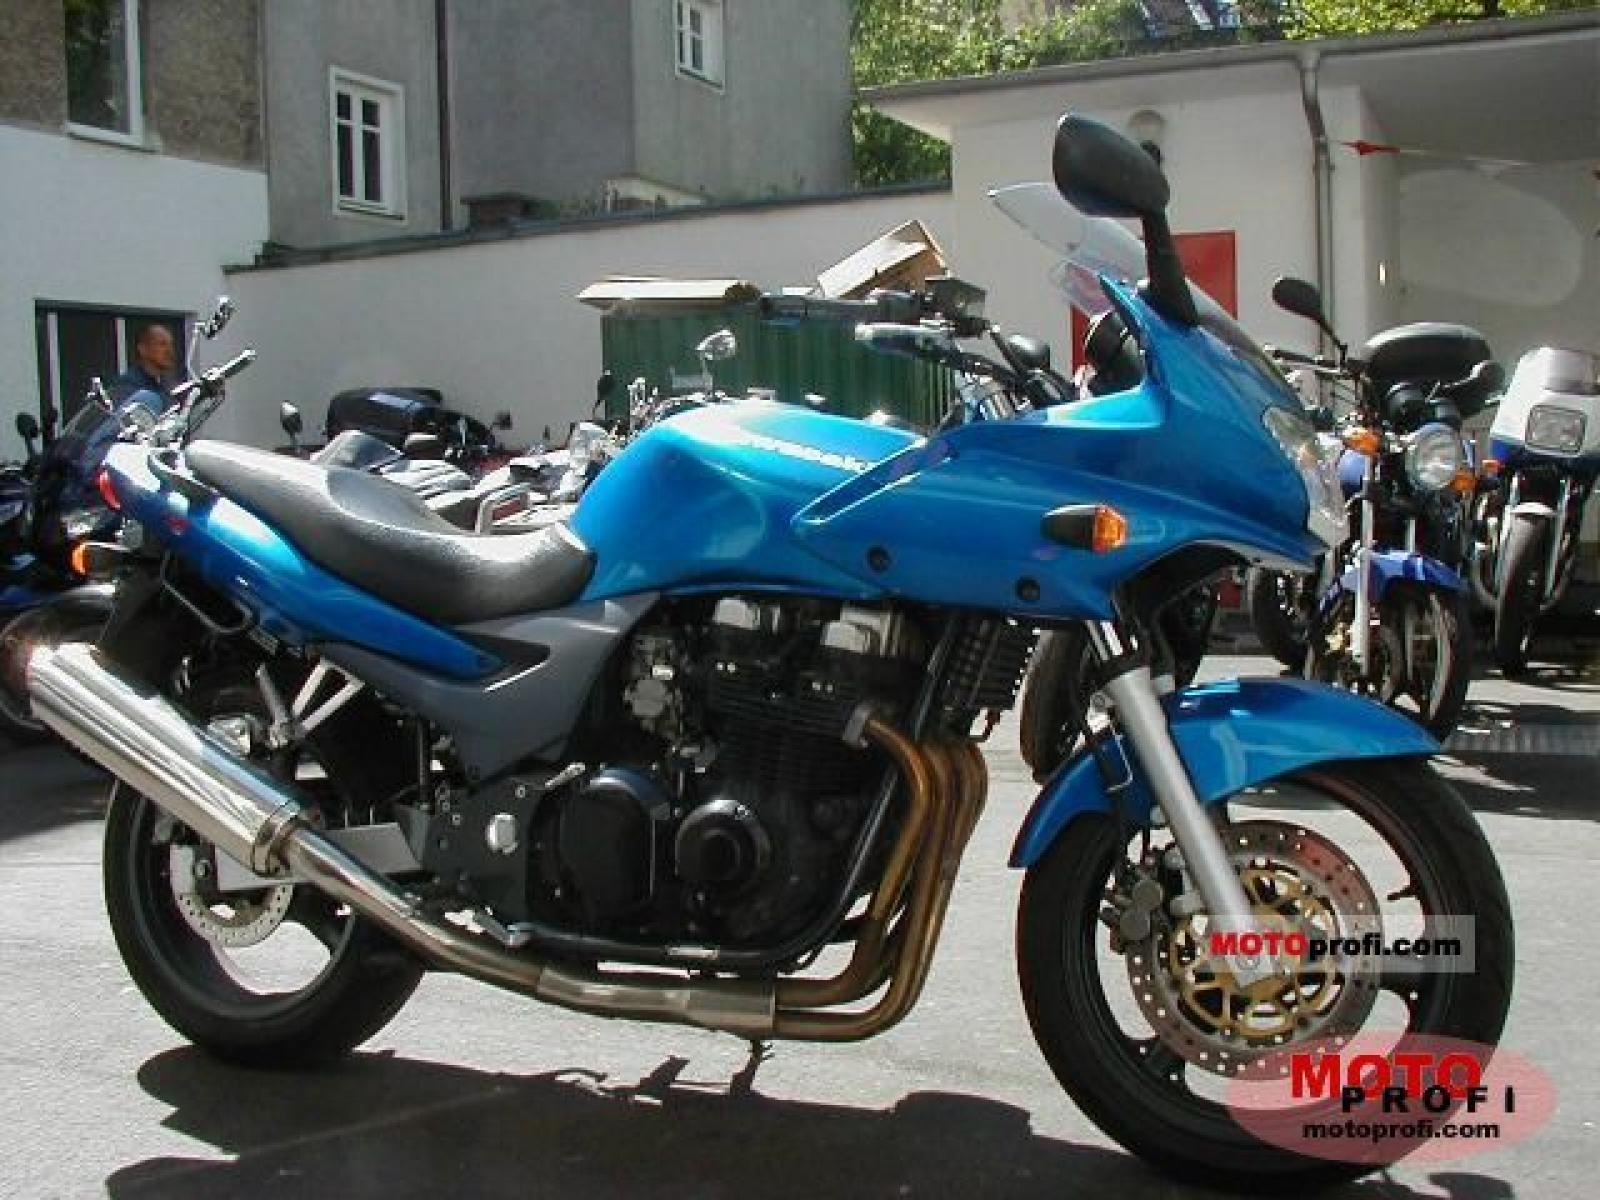 2003 Kawasaki ZR 7 pic 18 - onlymotorbikes.com